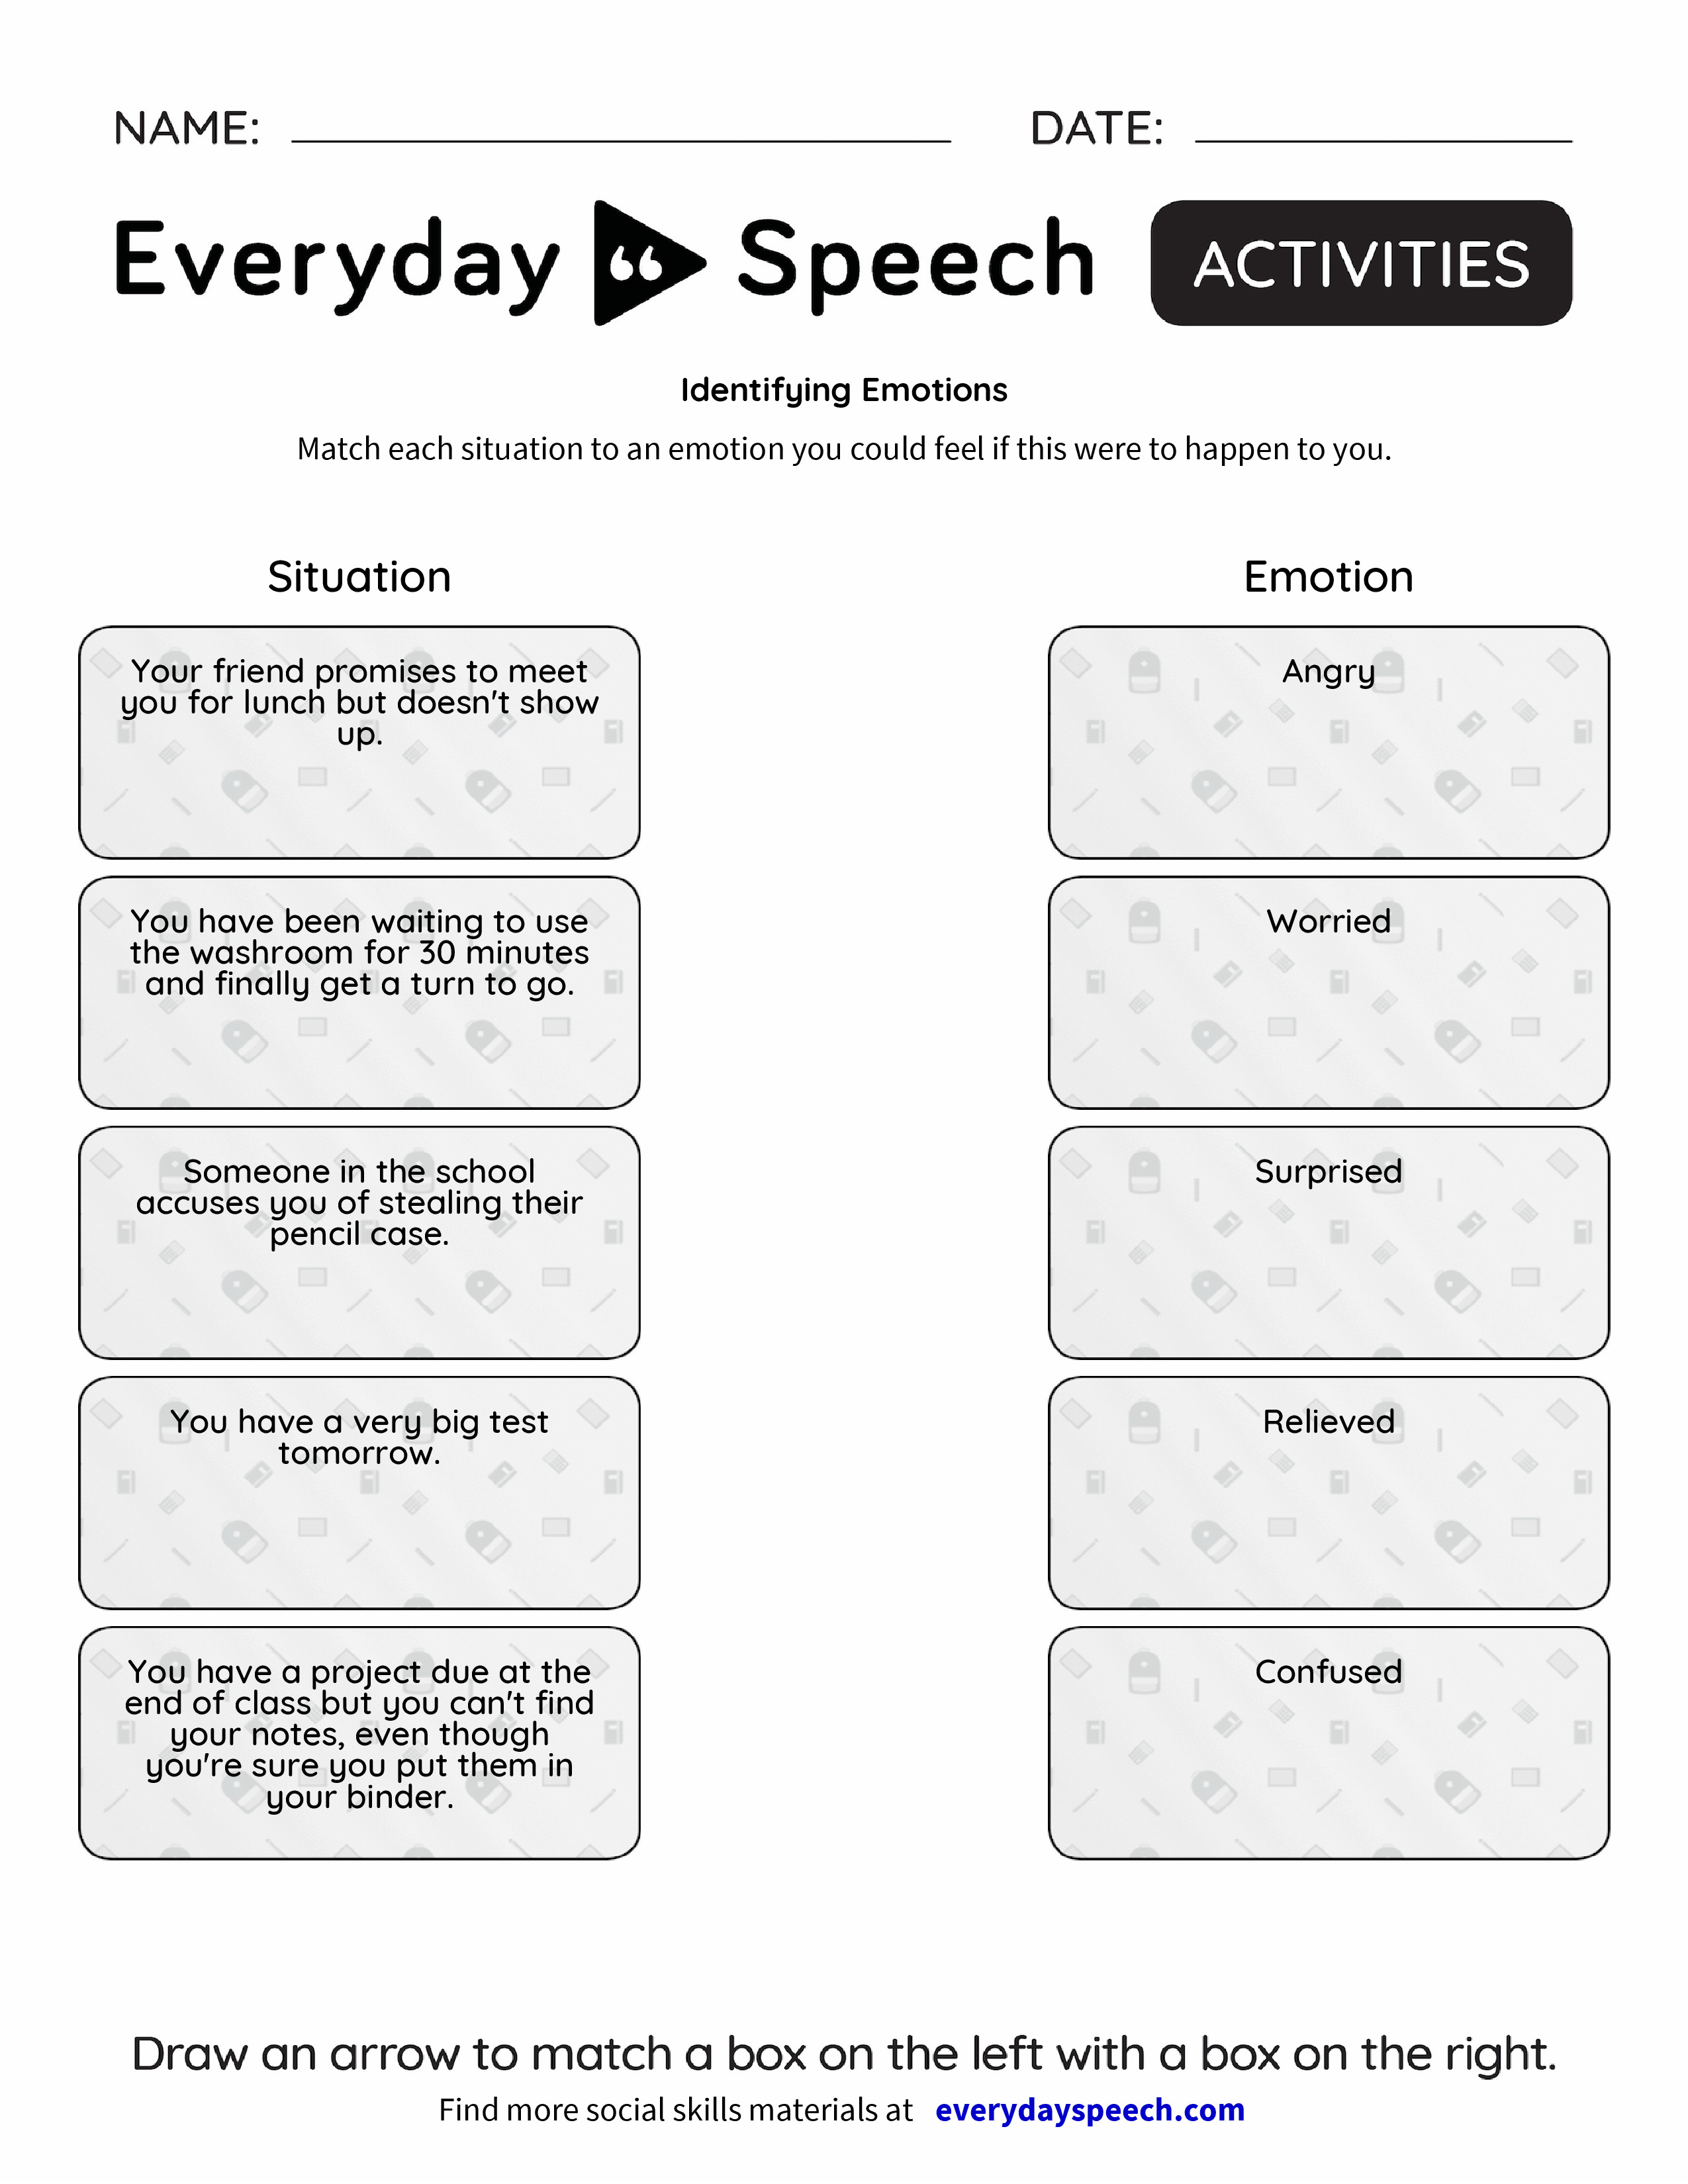 identifying-emotions-everyday-speech-everyday-speech